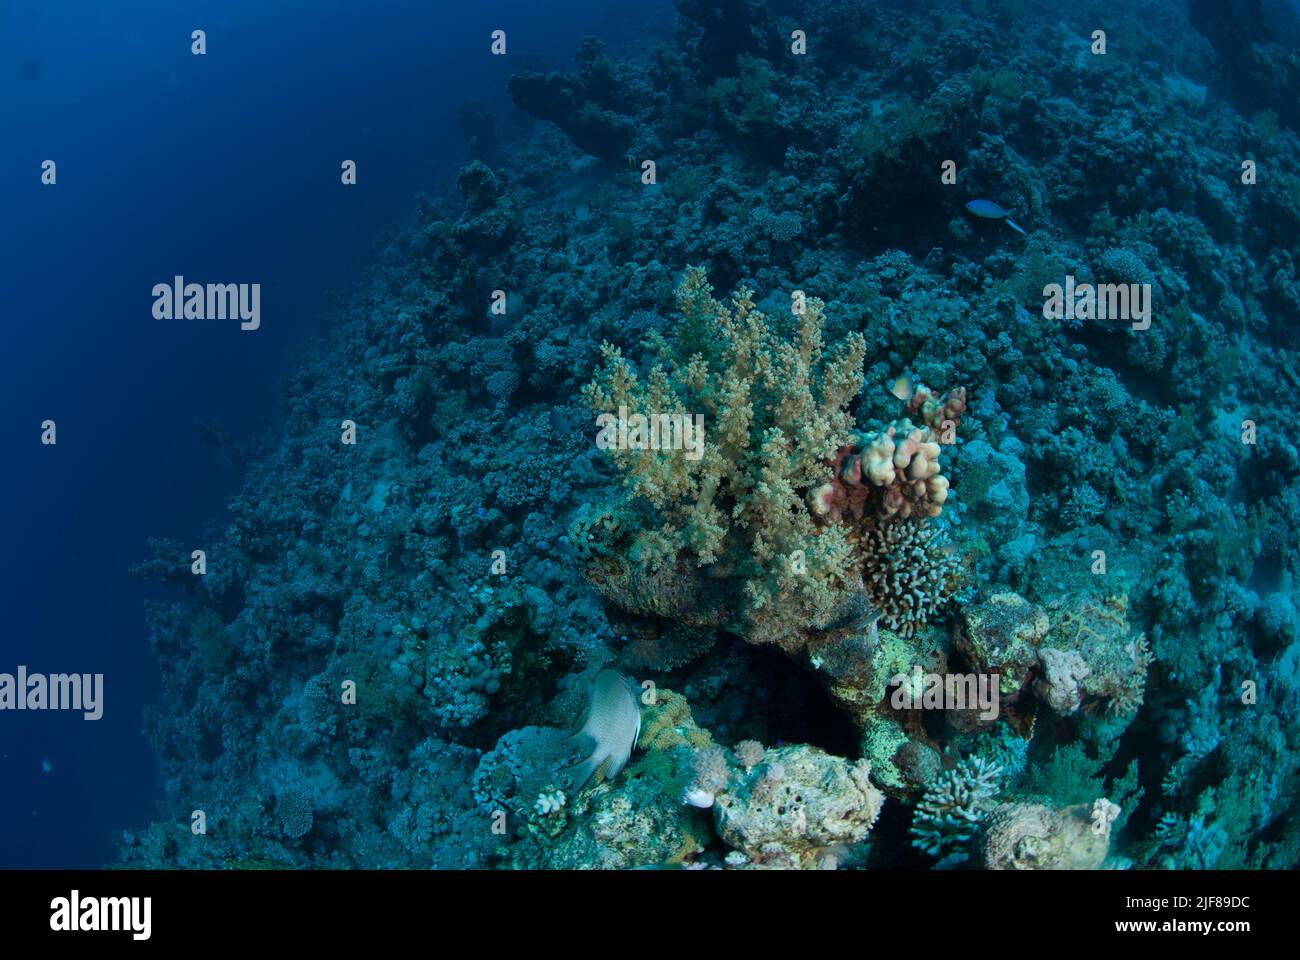 Broccoli coral, Litophyton arboreum, Nephtheidae, Sharm el Sheikh Red Sea, Egypt Stock Photo